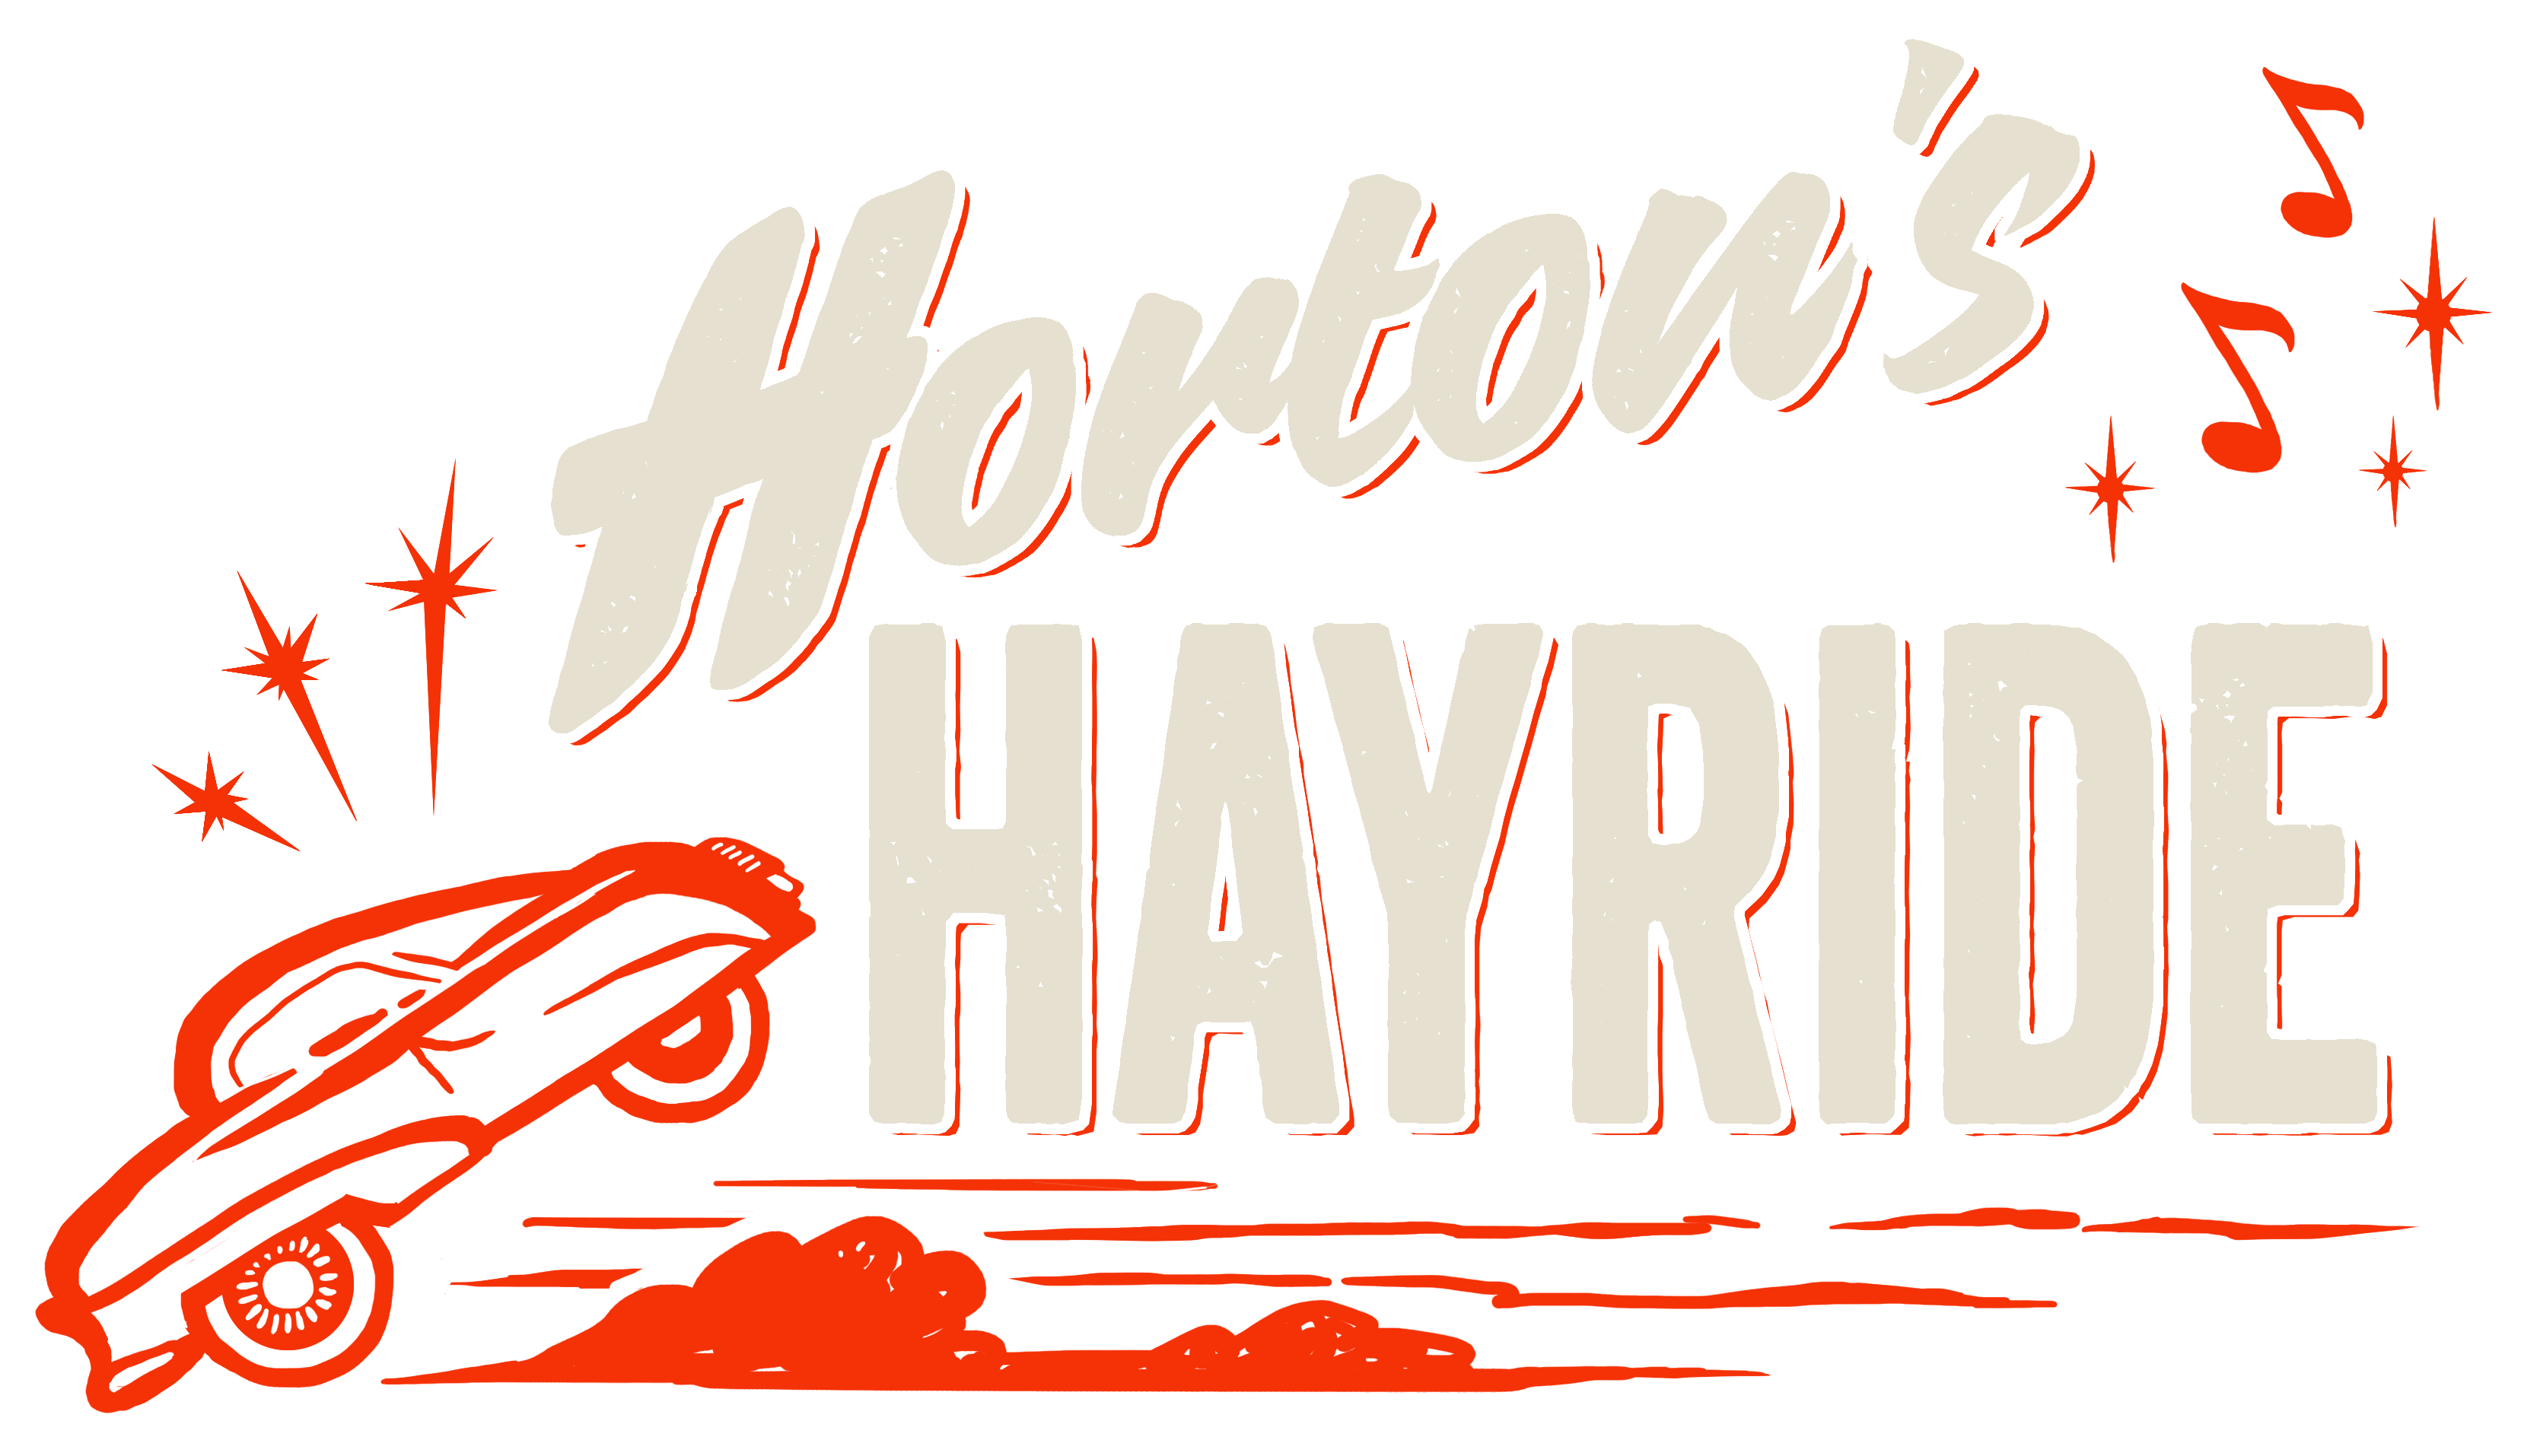 Horton's Hayride